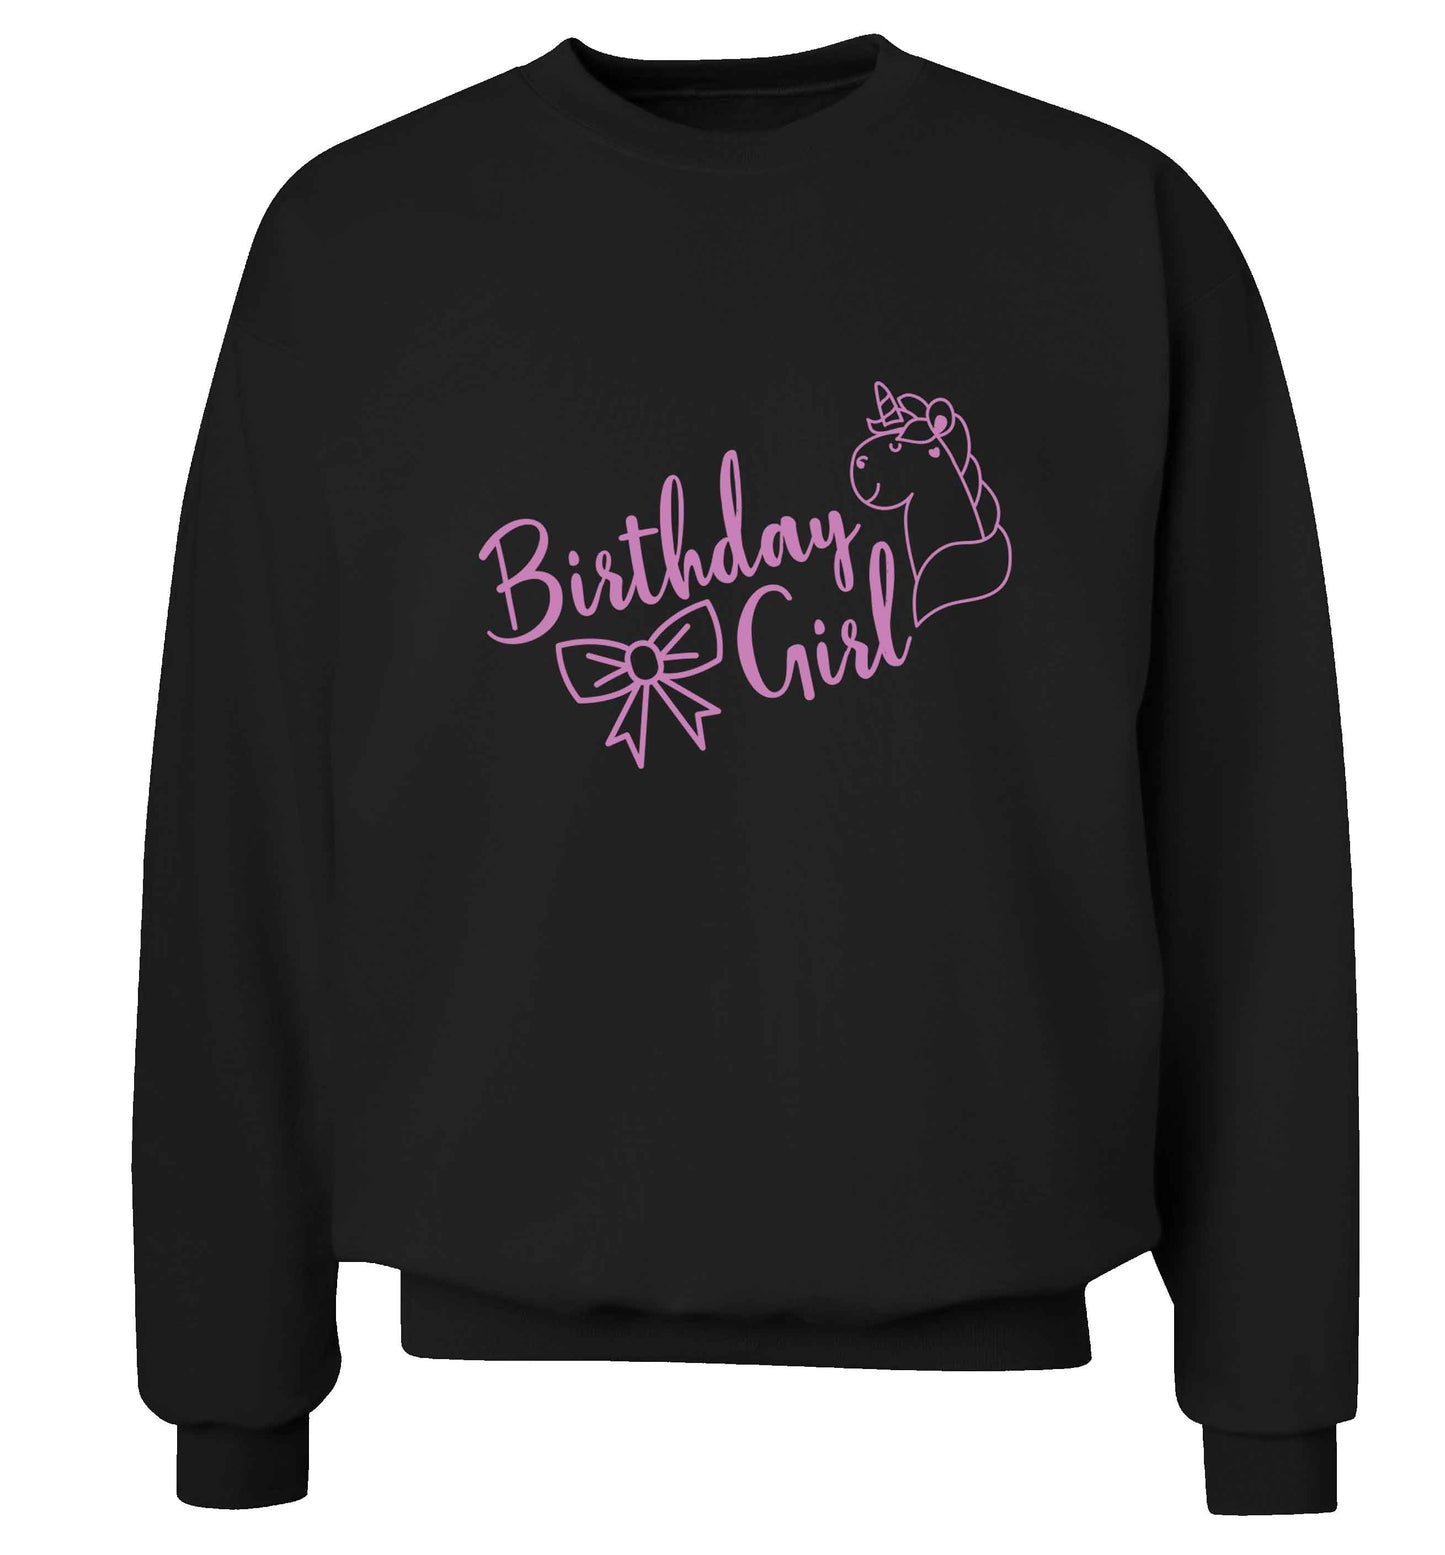 Birthday girl adult's unisex black sweater 2XL